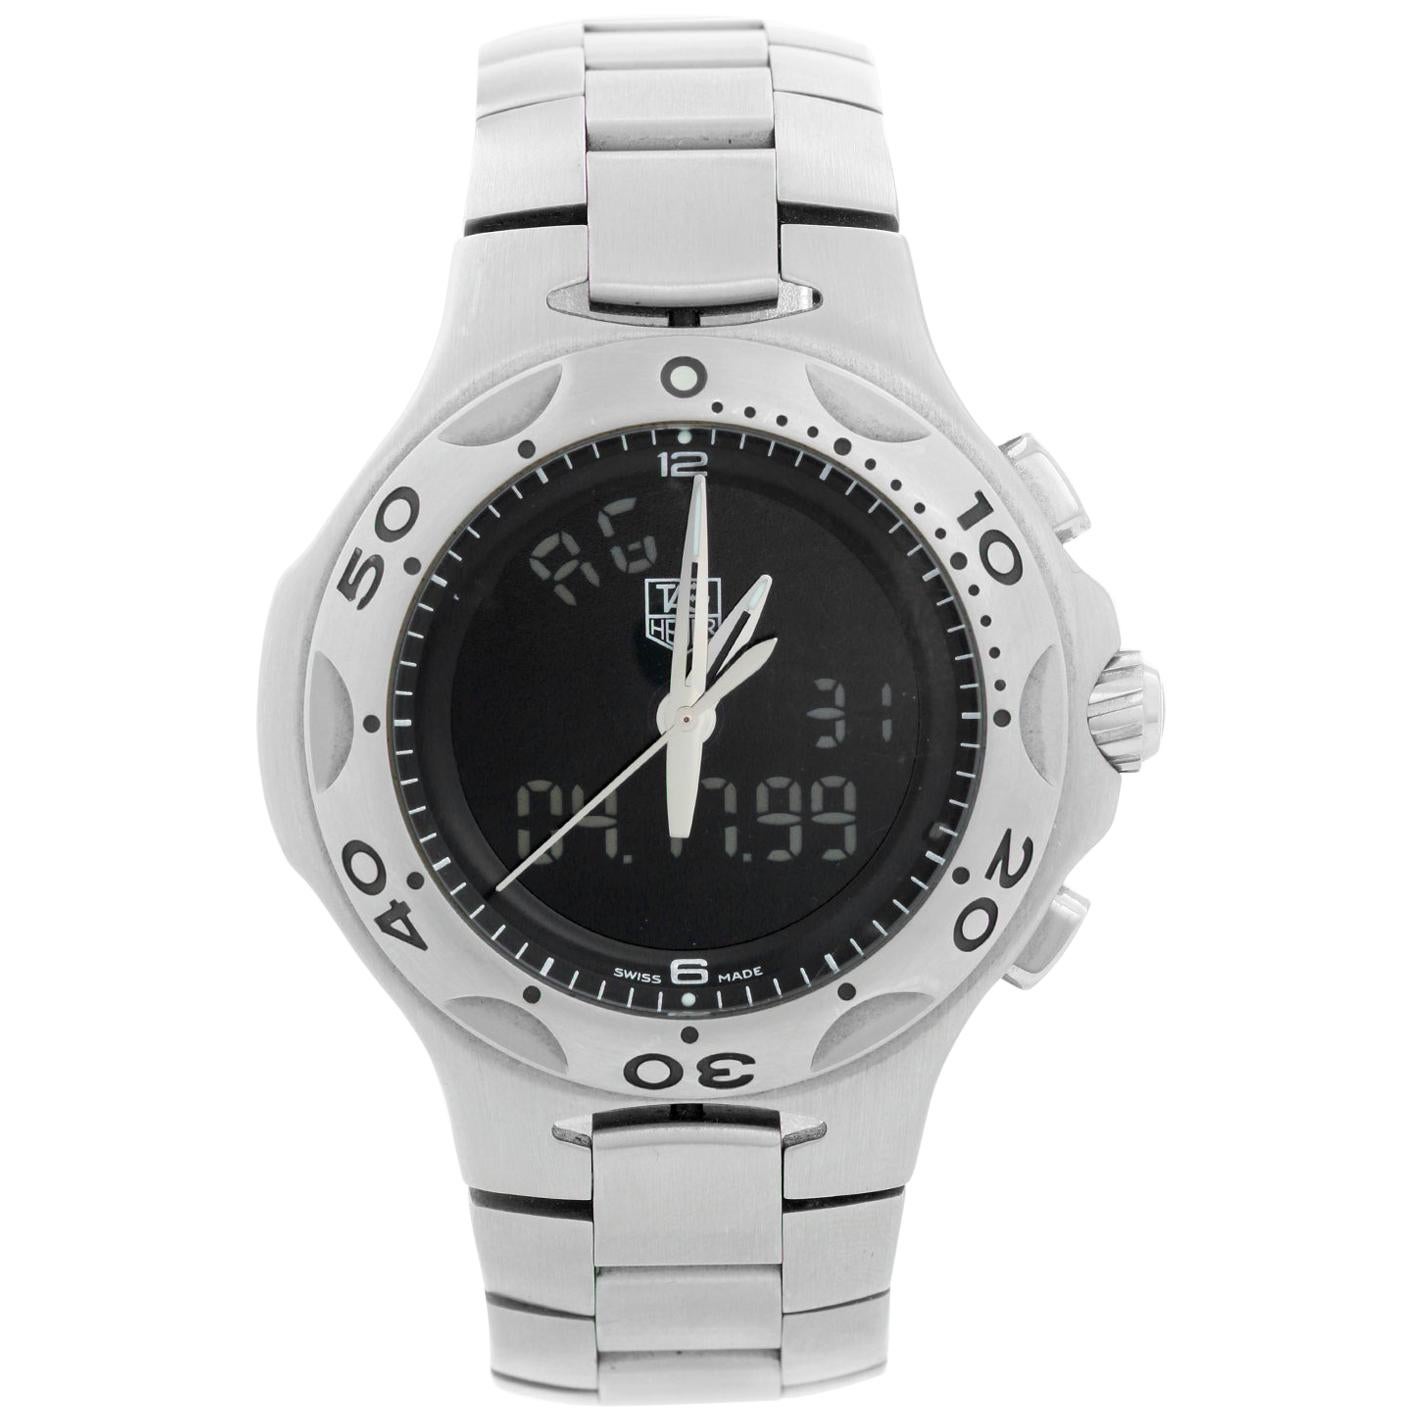 TAG Heuer Kirium Formula One Chronometer Men's Steel Watch CL111A.BA0700